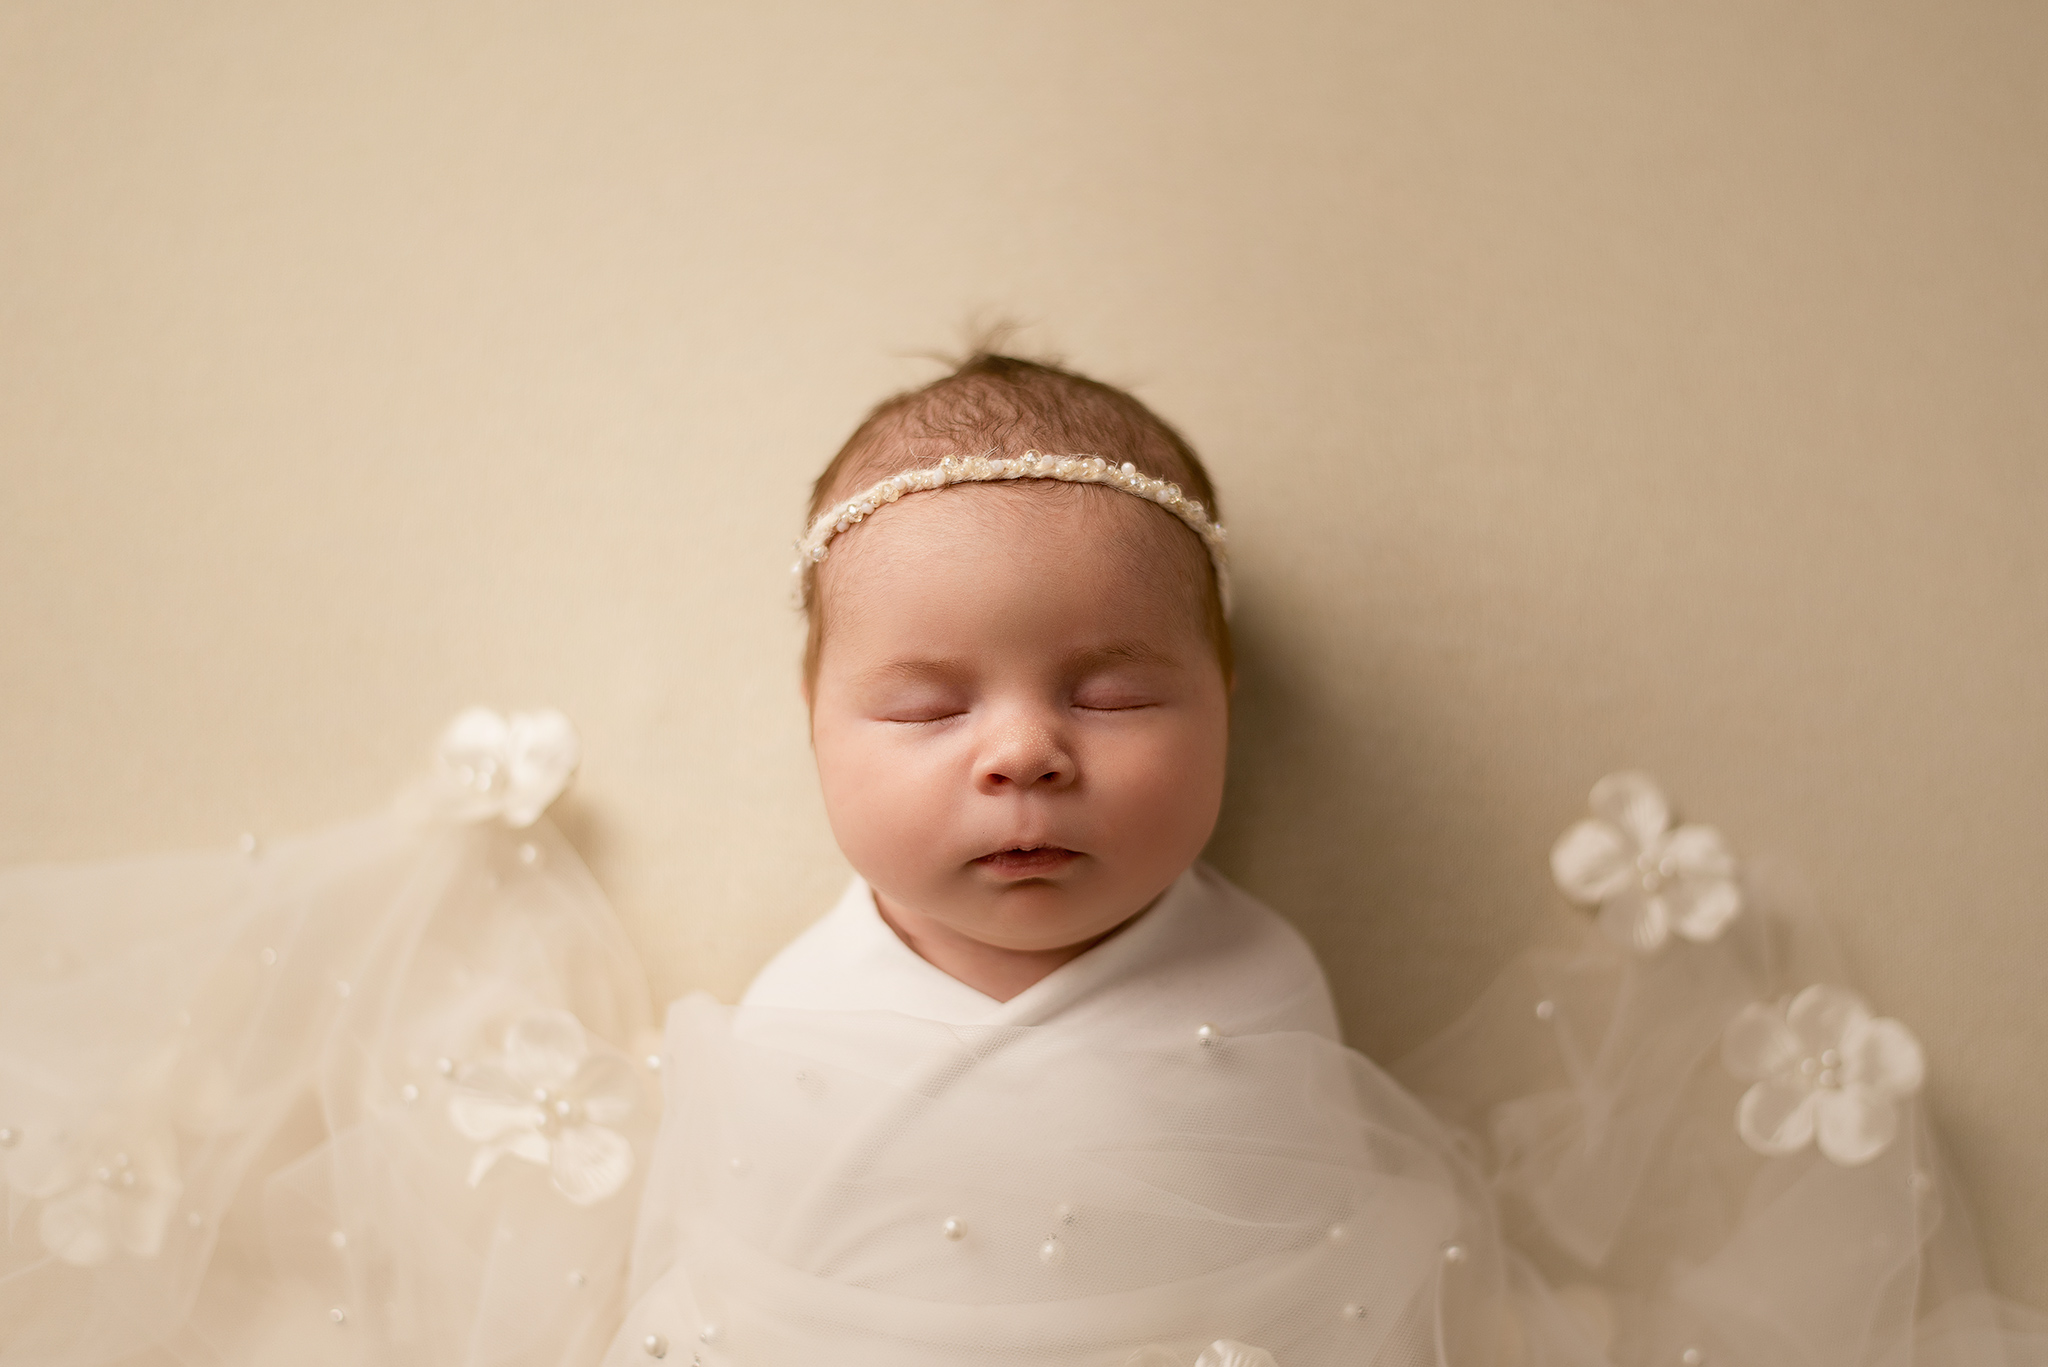 family heirloom for newborn photography shoot